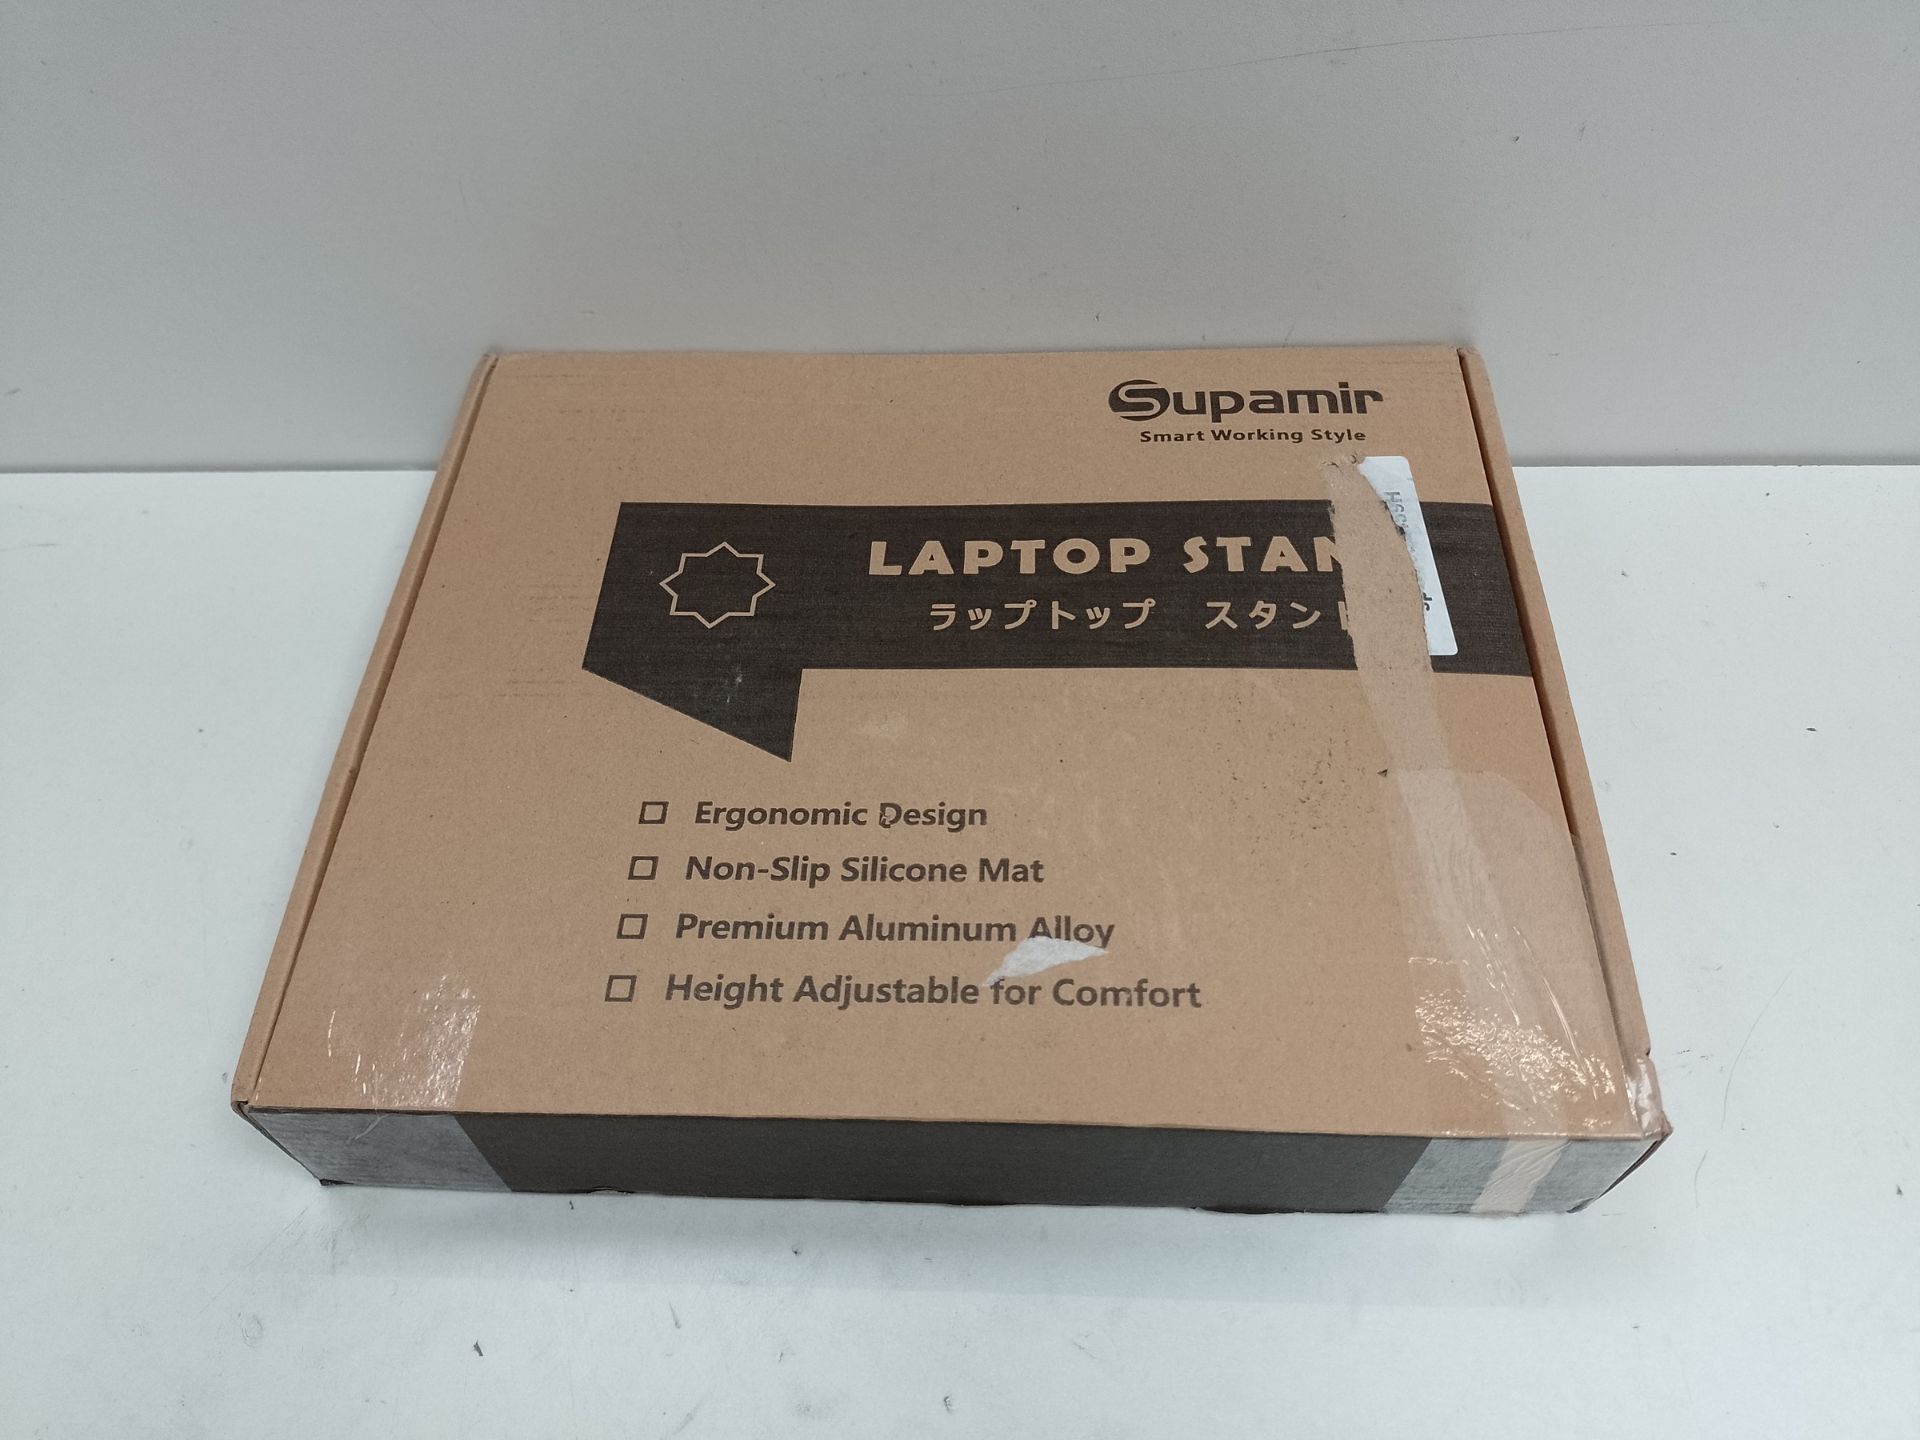 RRP £34.14 supamir Laptop Stand for Desk Adjustable Height - Image 2 of 2